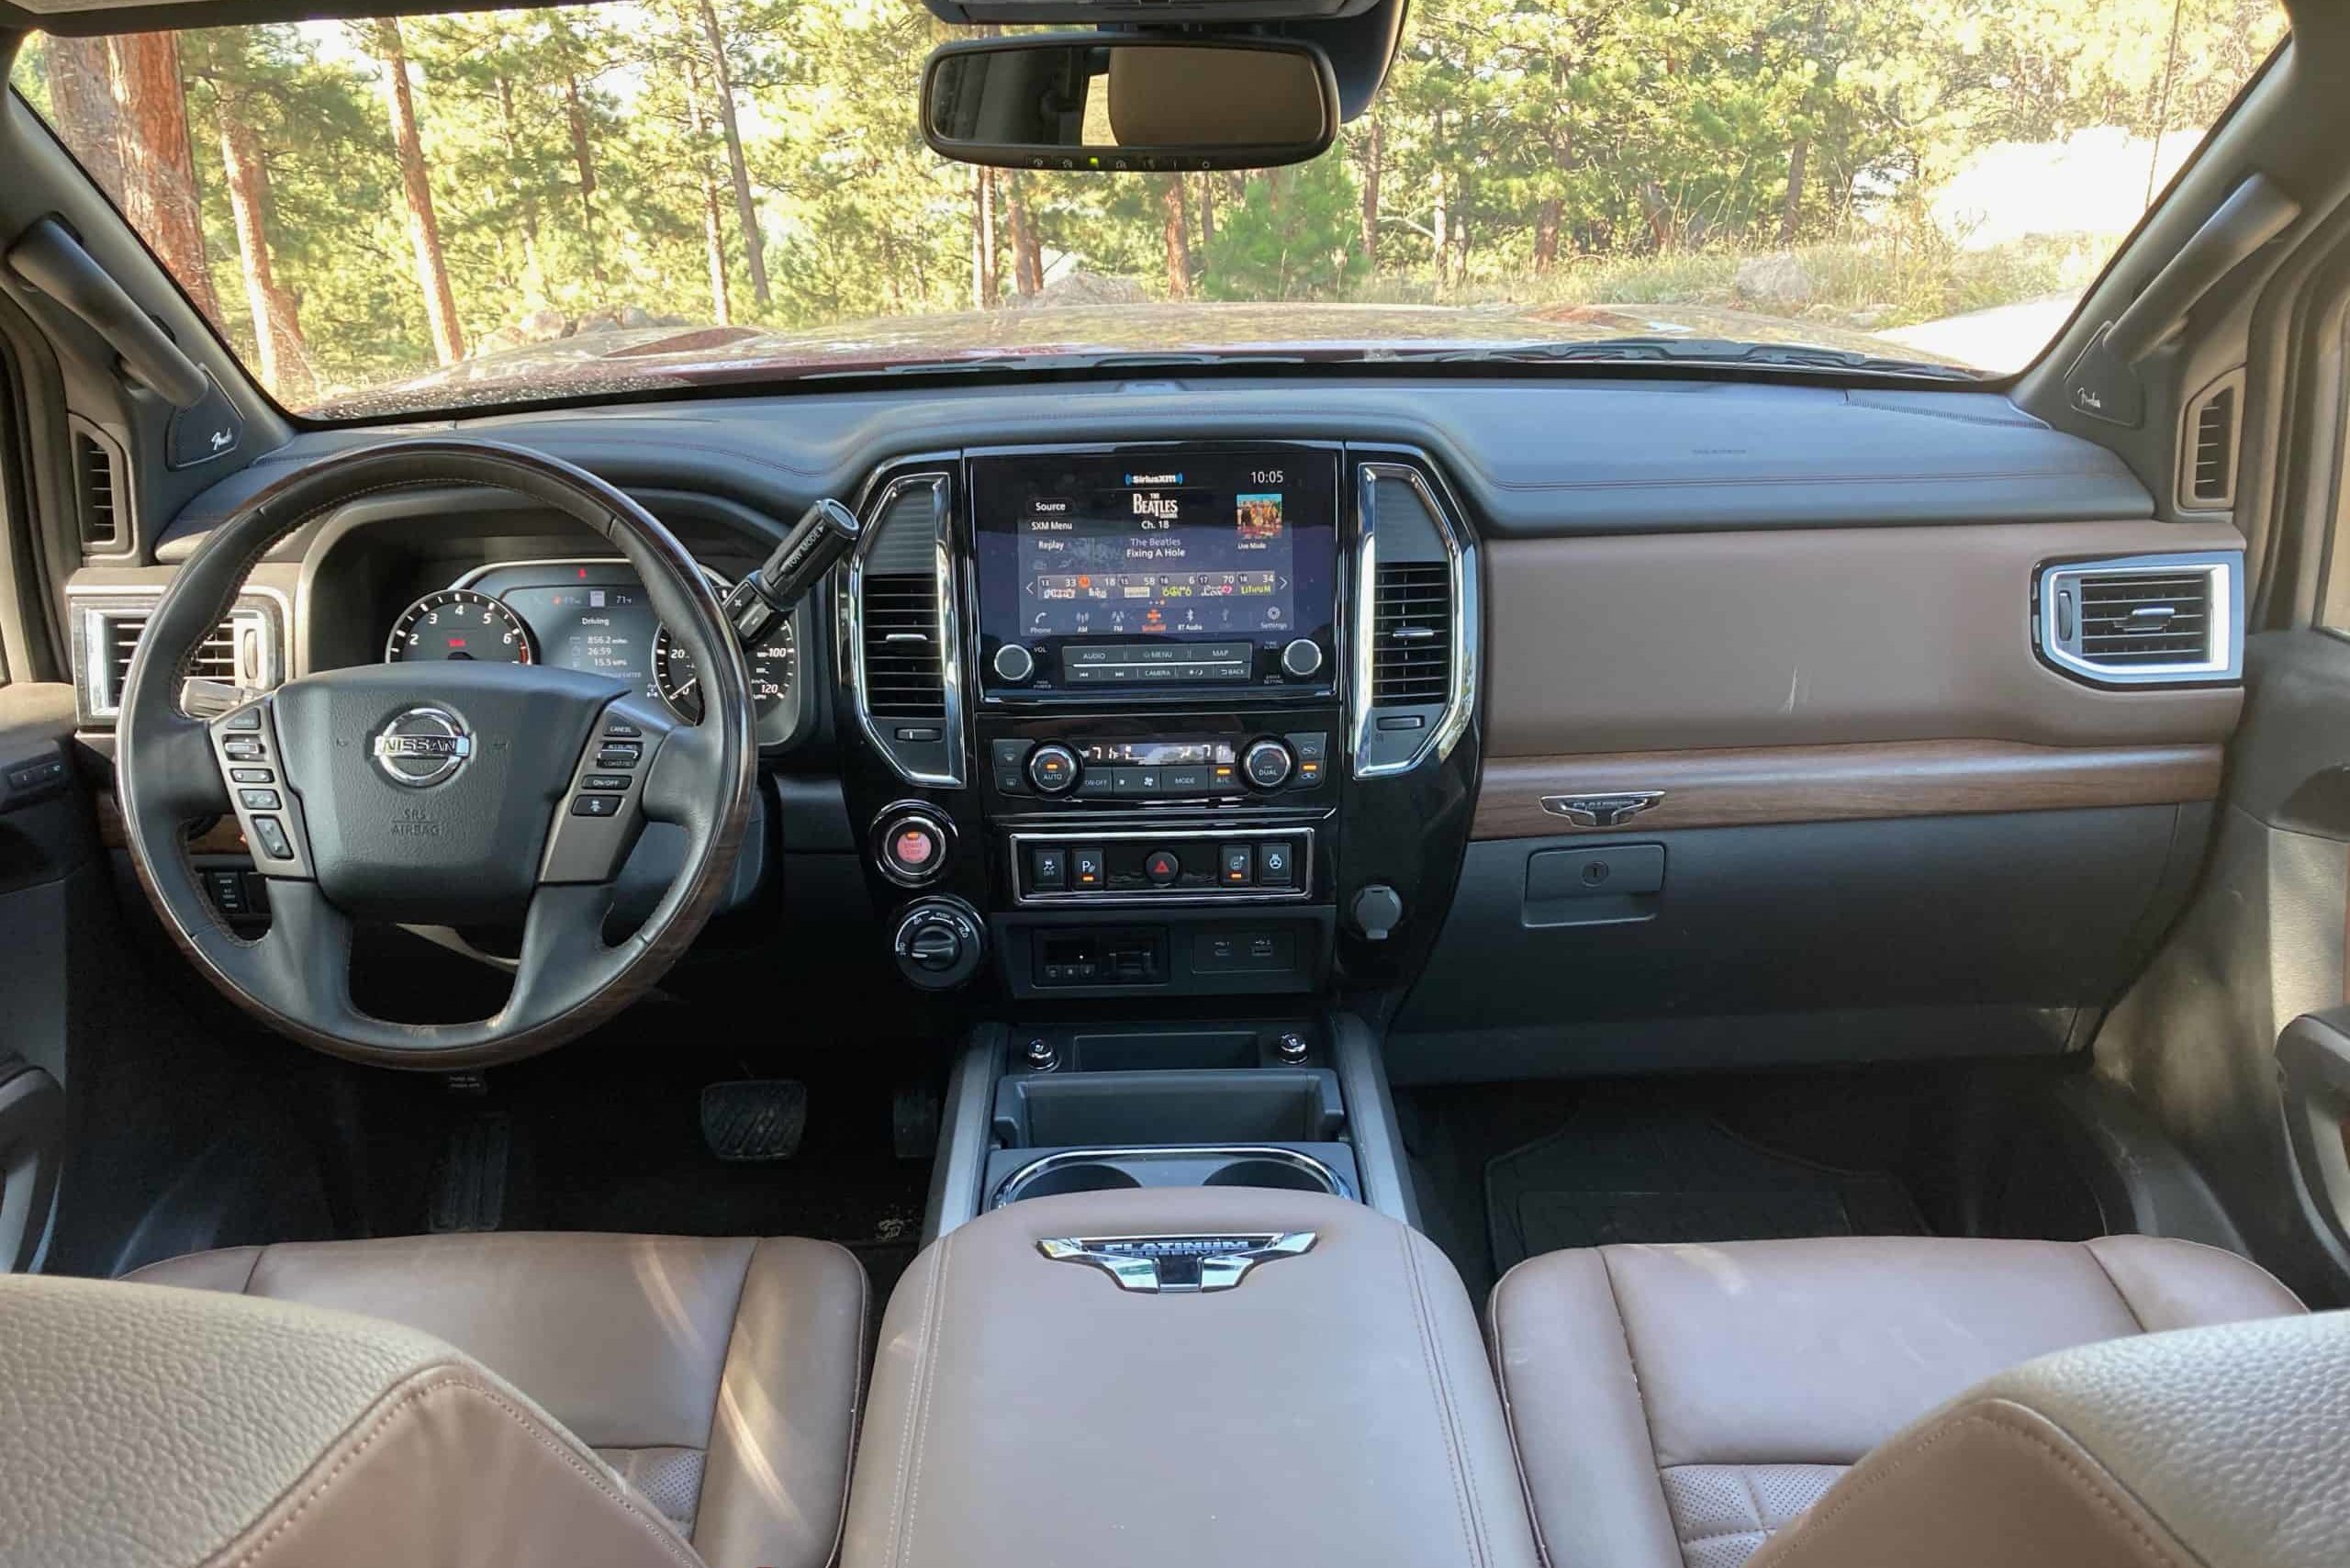 2020 Nissan Titan XD interior